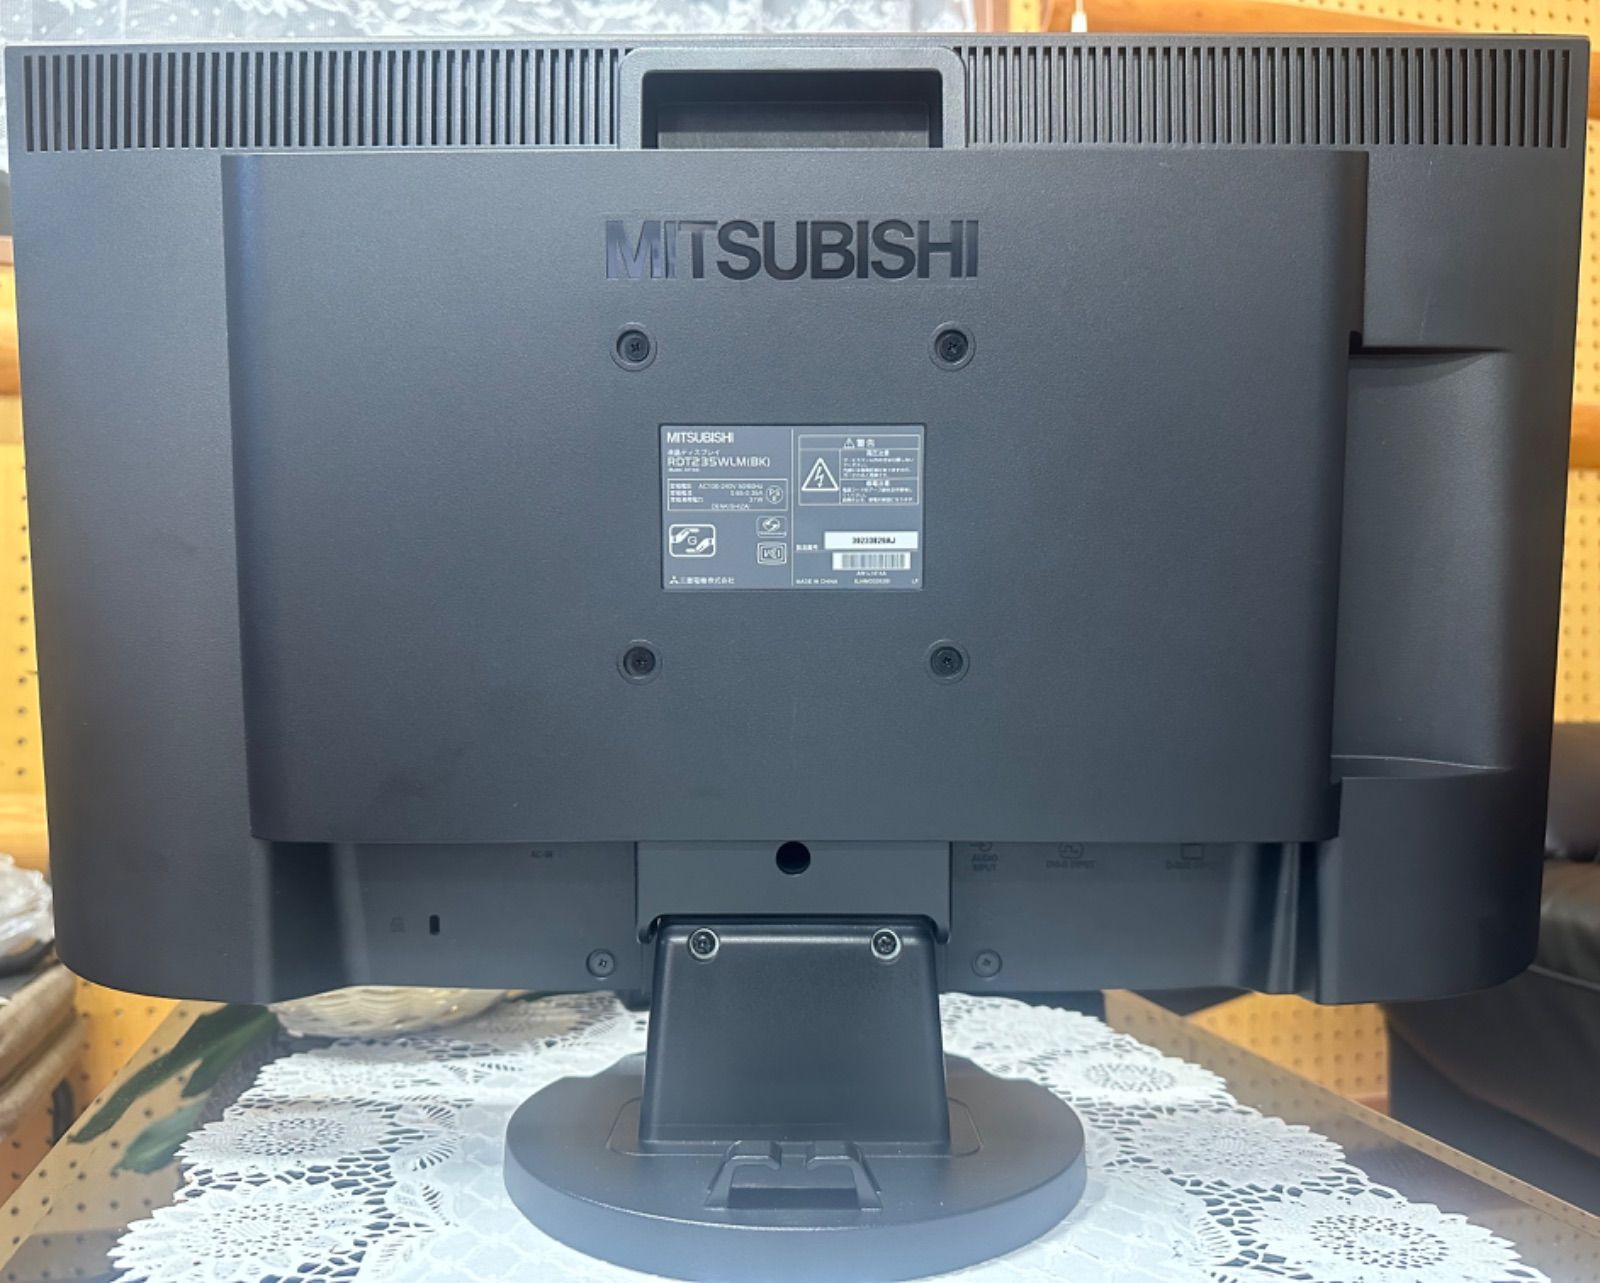 MITSUBISHI 23型ワイド液晶ディスプレイ(ノングレア) フルHD対応/ブラック RDT235WLM(BK) 中古-0619